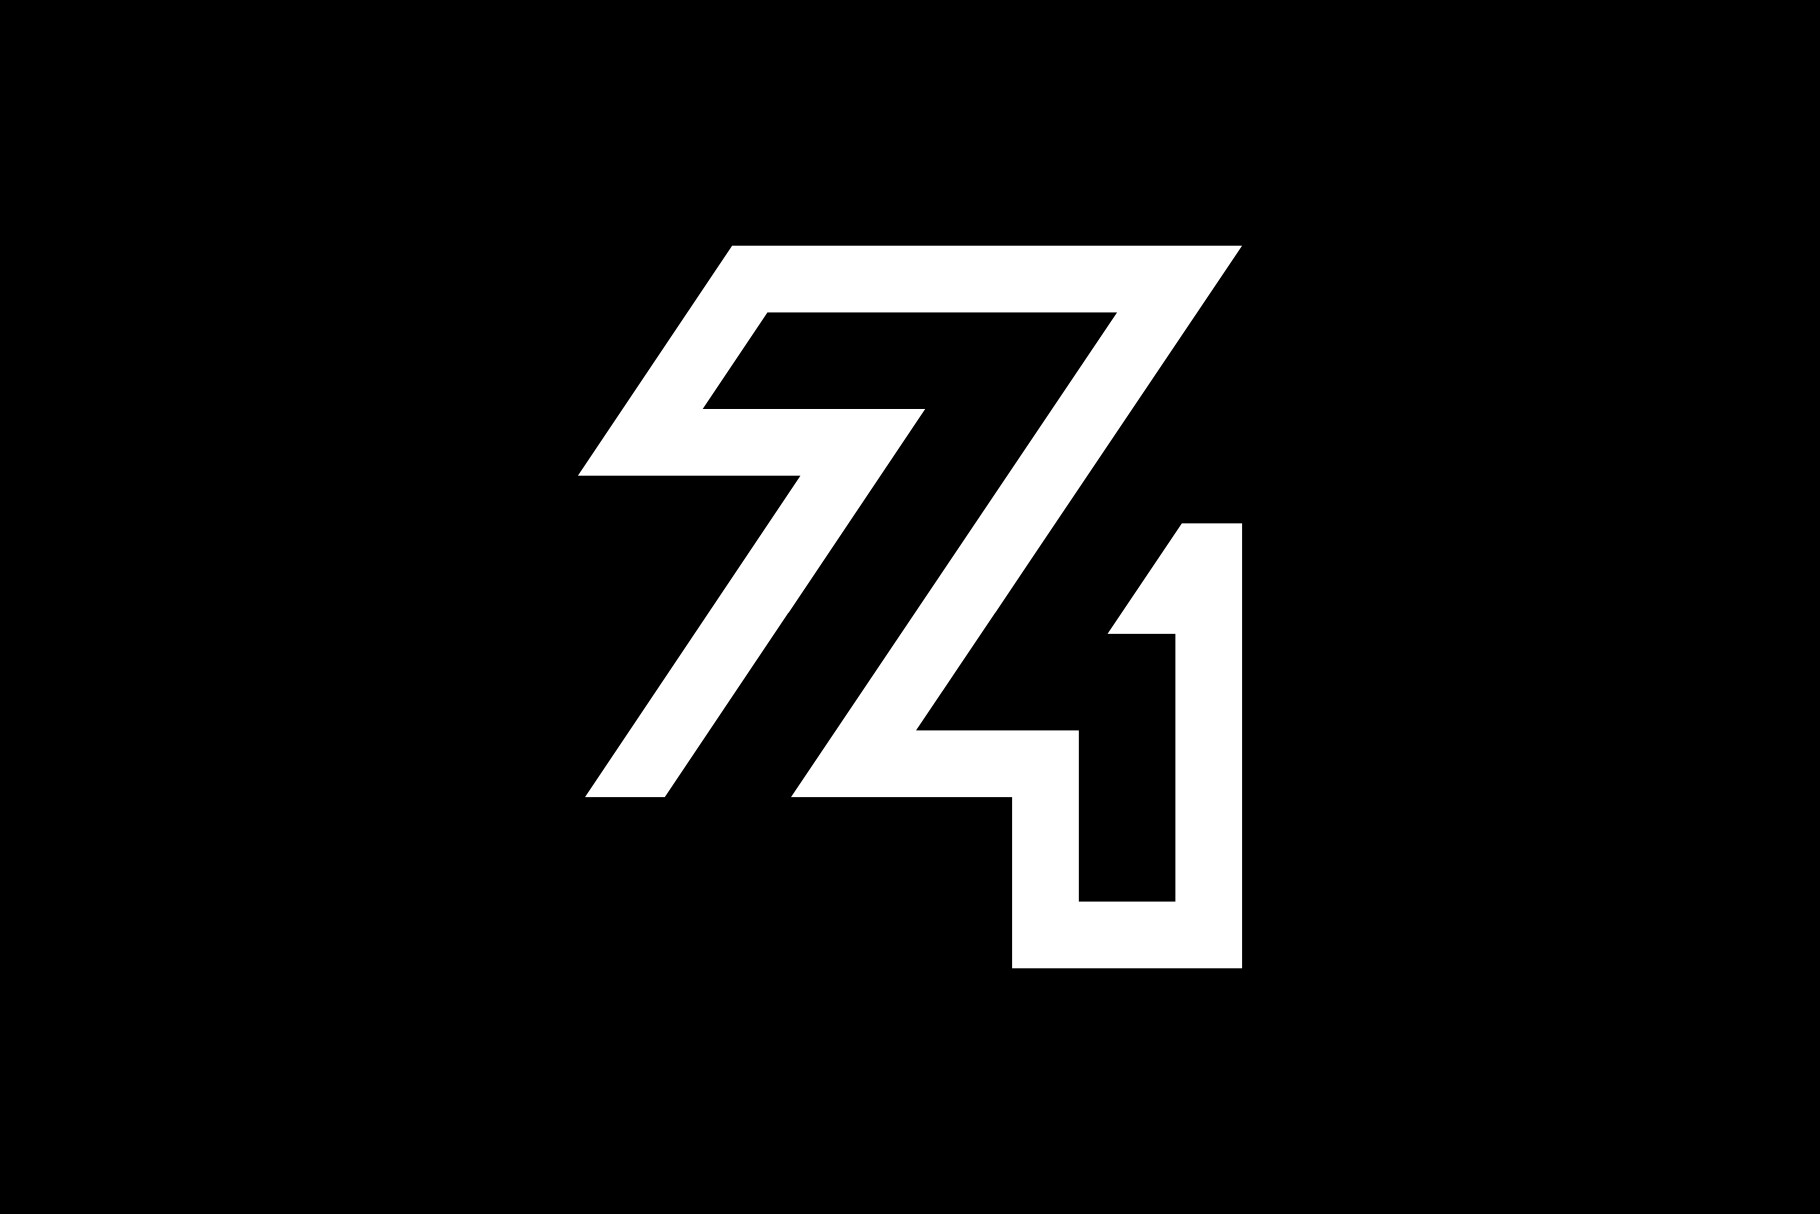 Number 74 47 Minimalist Logo Graphic by Sore.studios · Creative Fabrica